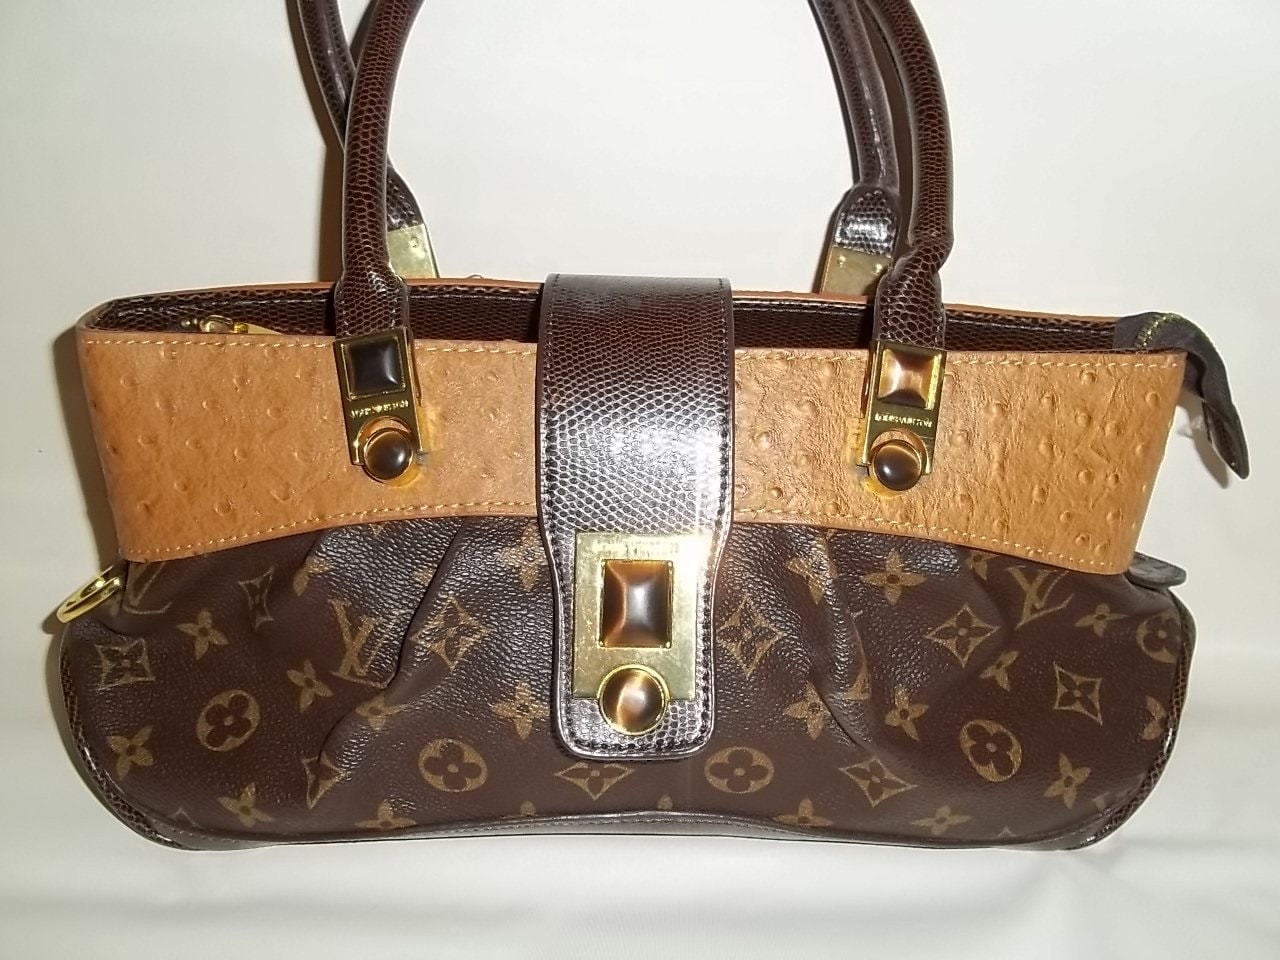 Louis Vuitton Monogram handbag with gold hardware by KissaPrince